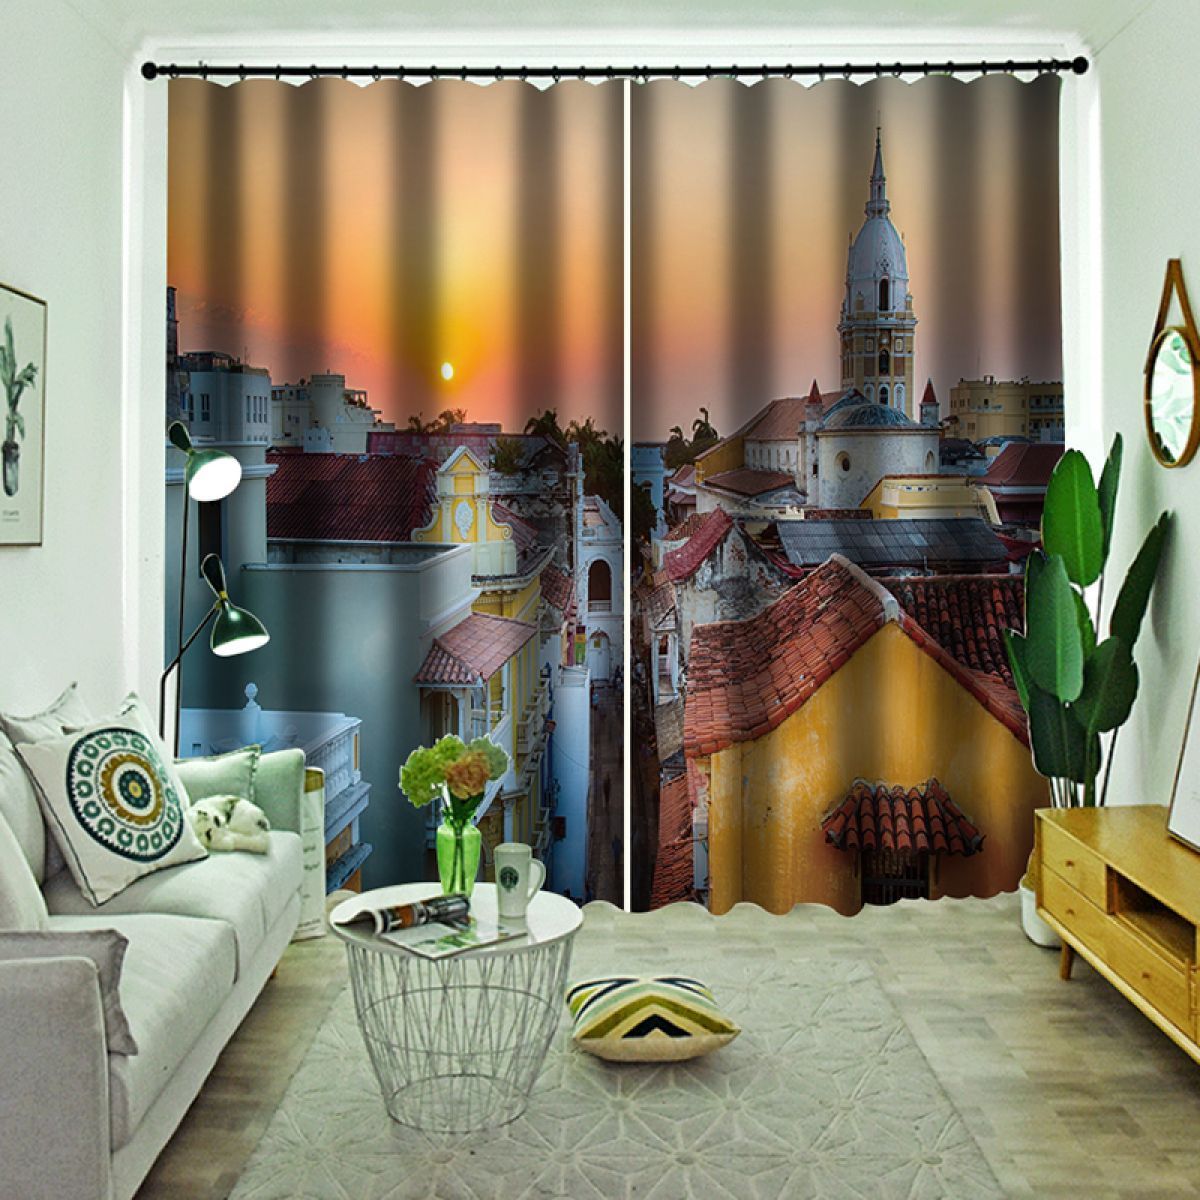 3d Sunset City Scenery Printed Window Curtain Home Decor